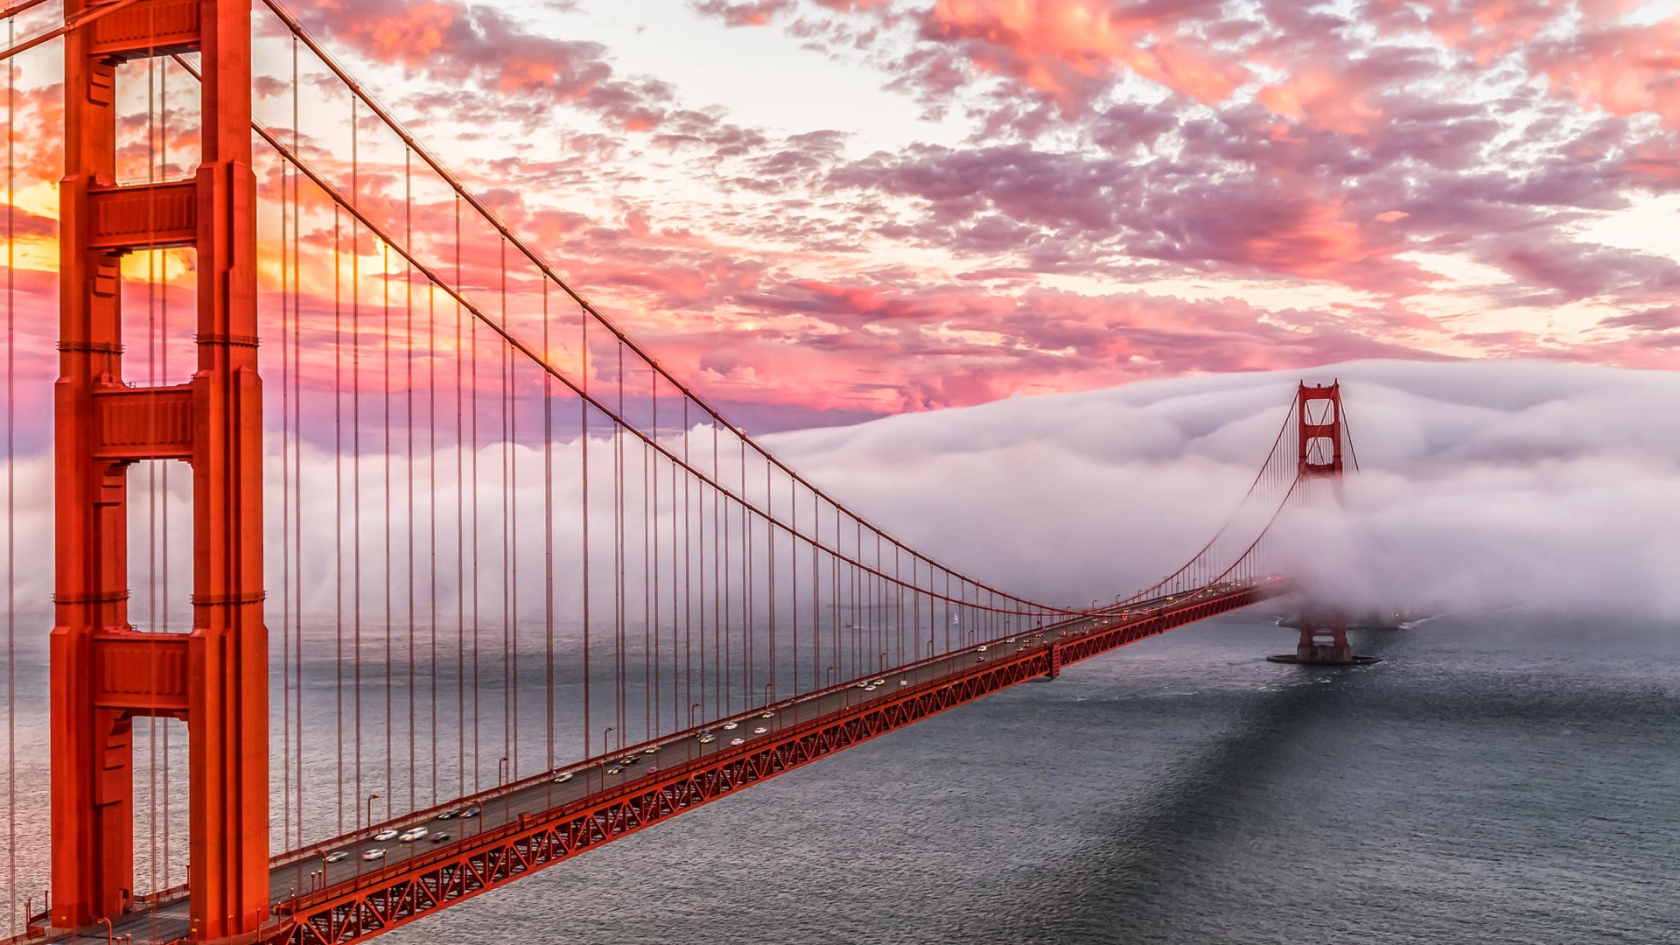 Golden Gate Bridge in San Francisco for 1680 x 945 HDTV resolution